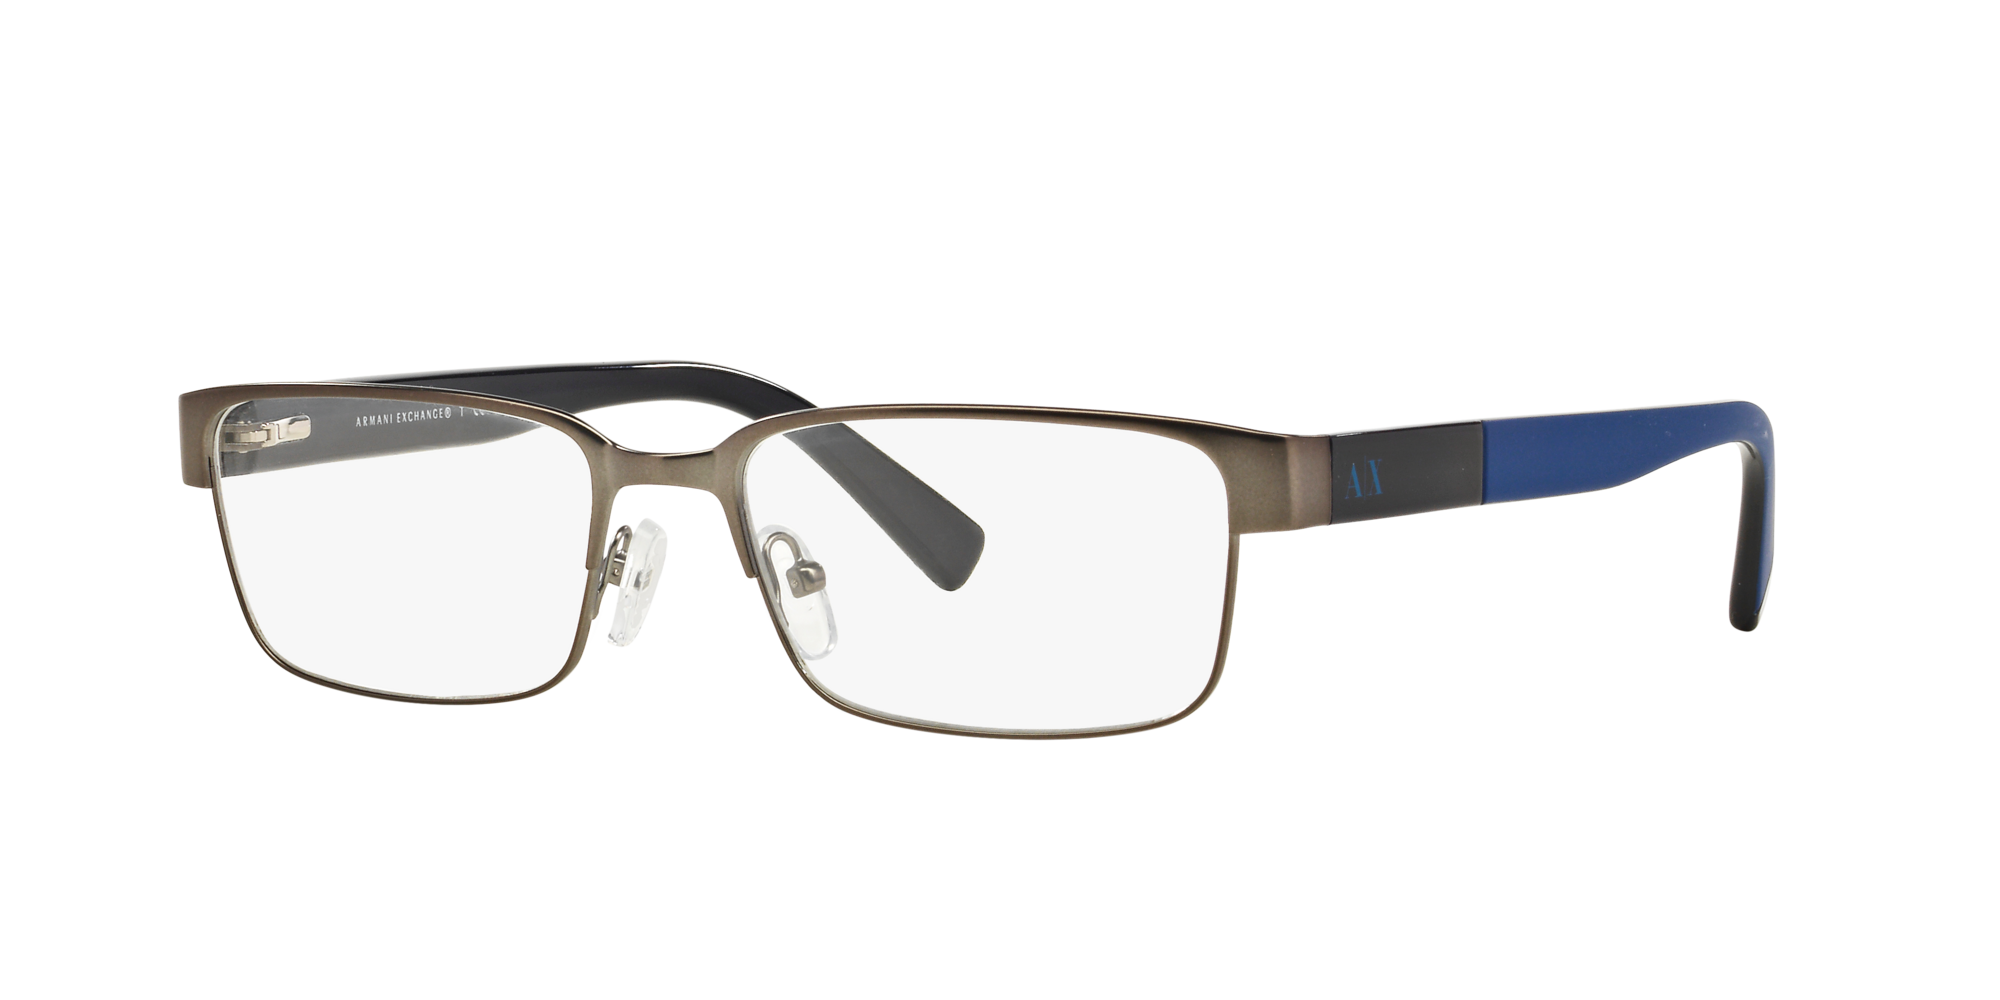 Angle_Left01 Armani Exchange AX 1017 Glasses Transparent / Grey